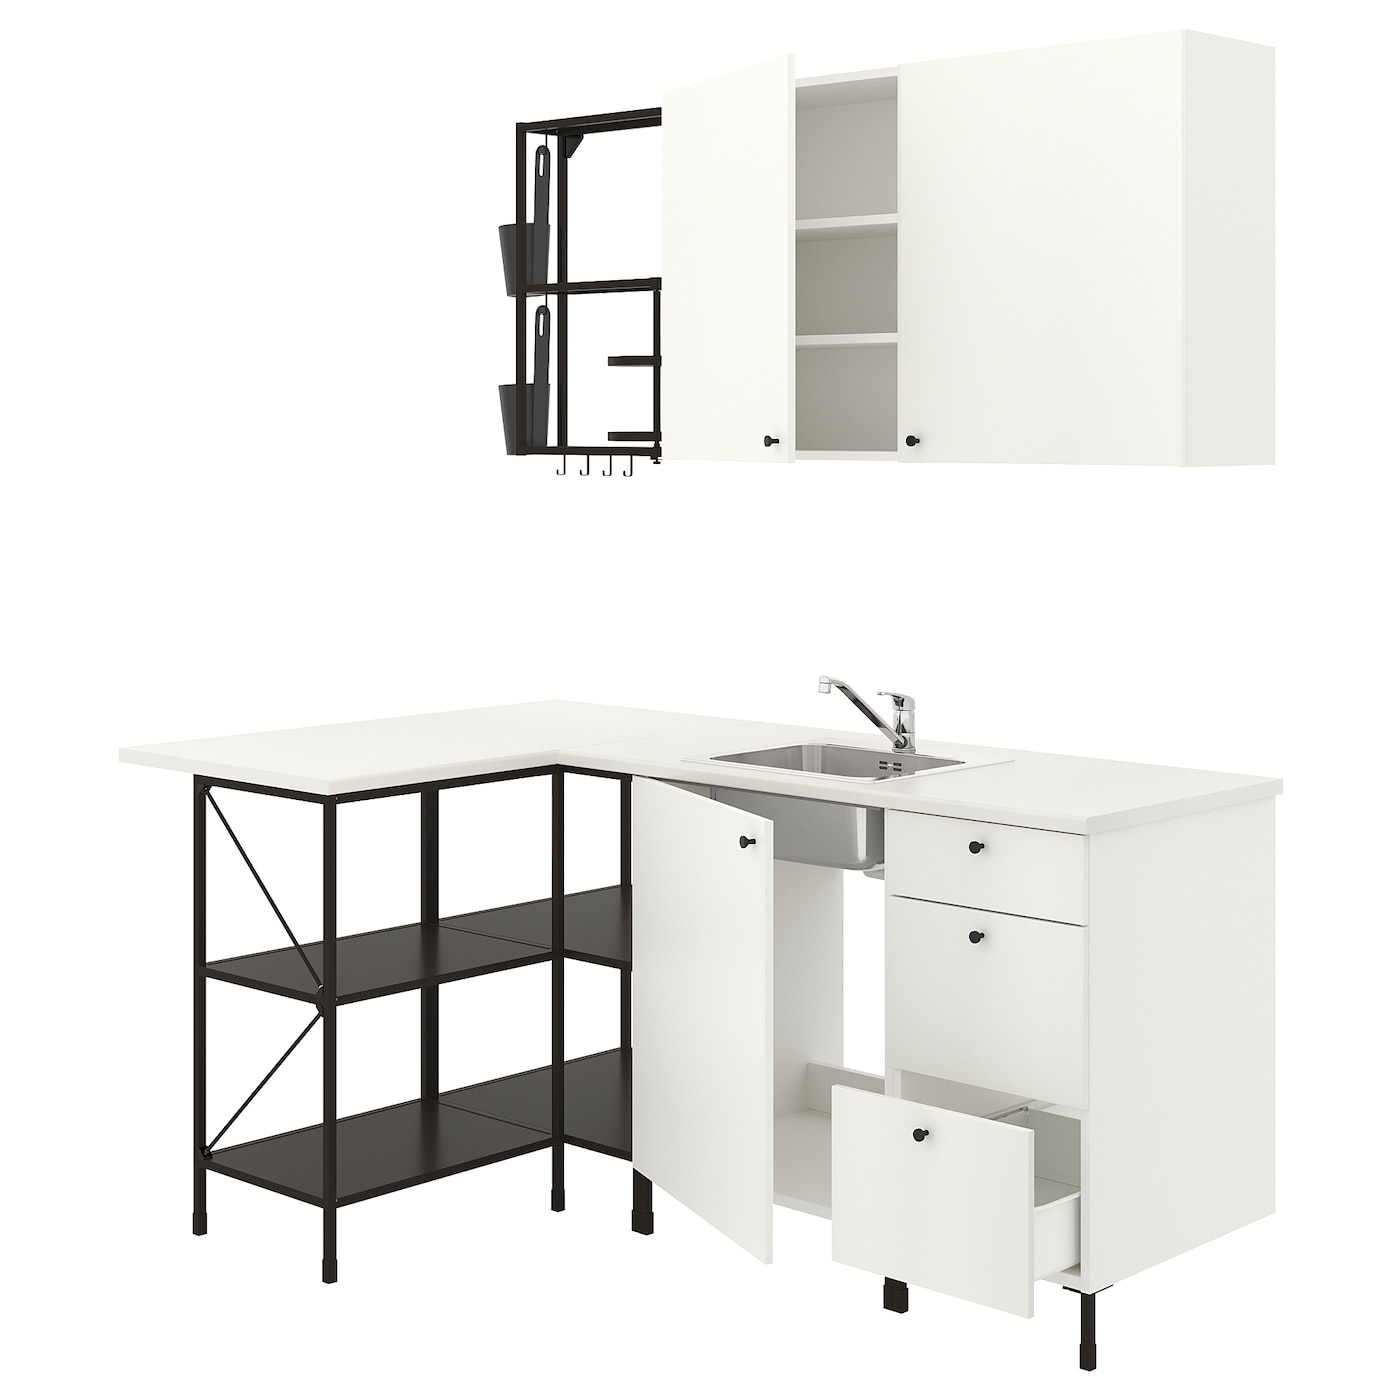 Угловая кухня -  ENHET  IKEA/ ЭНХЕТ ИКЕА, 185х75 см, белый/черный